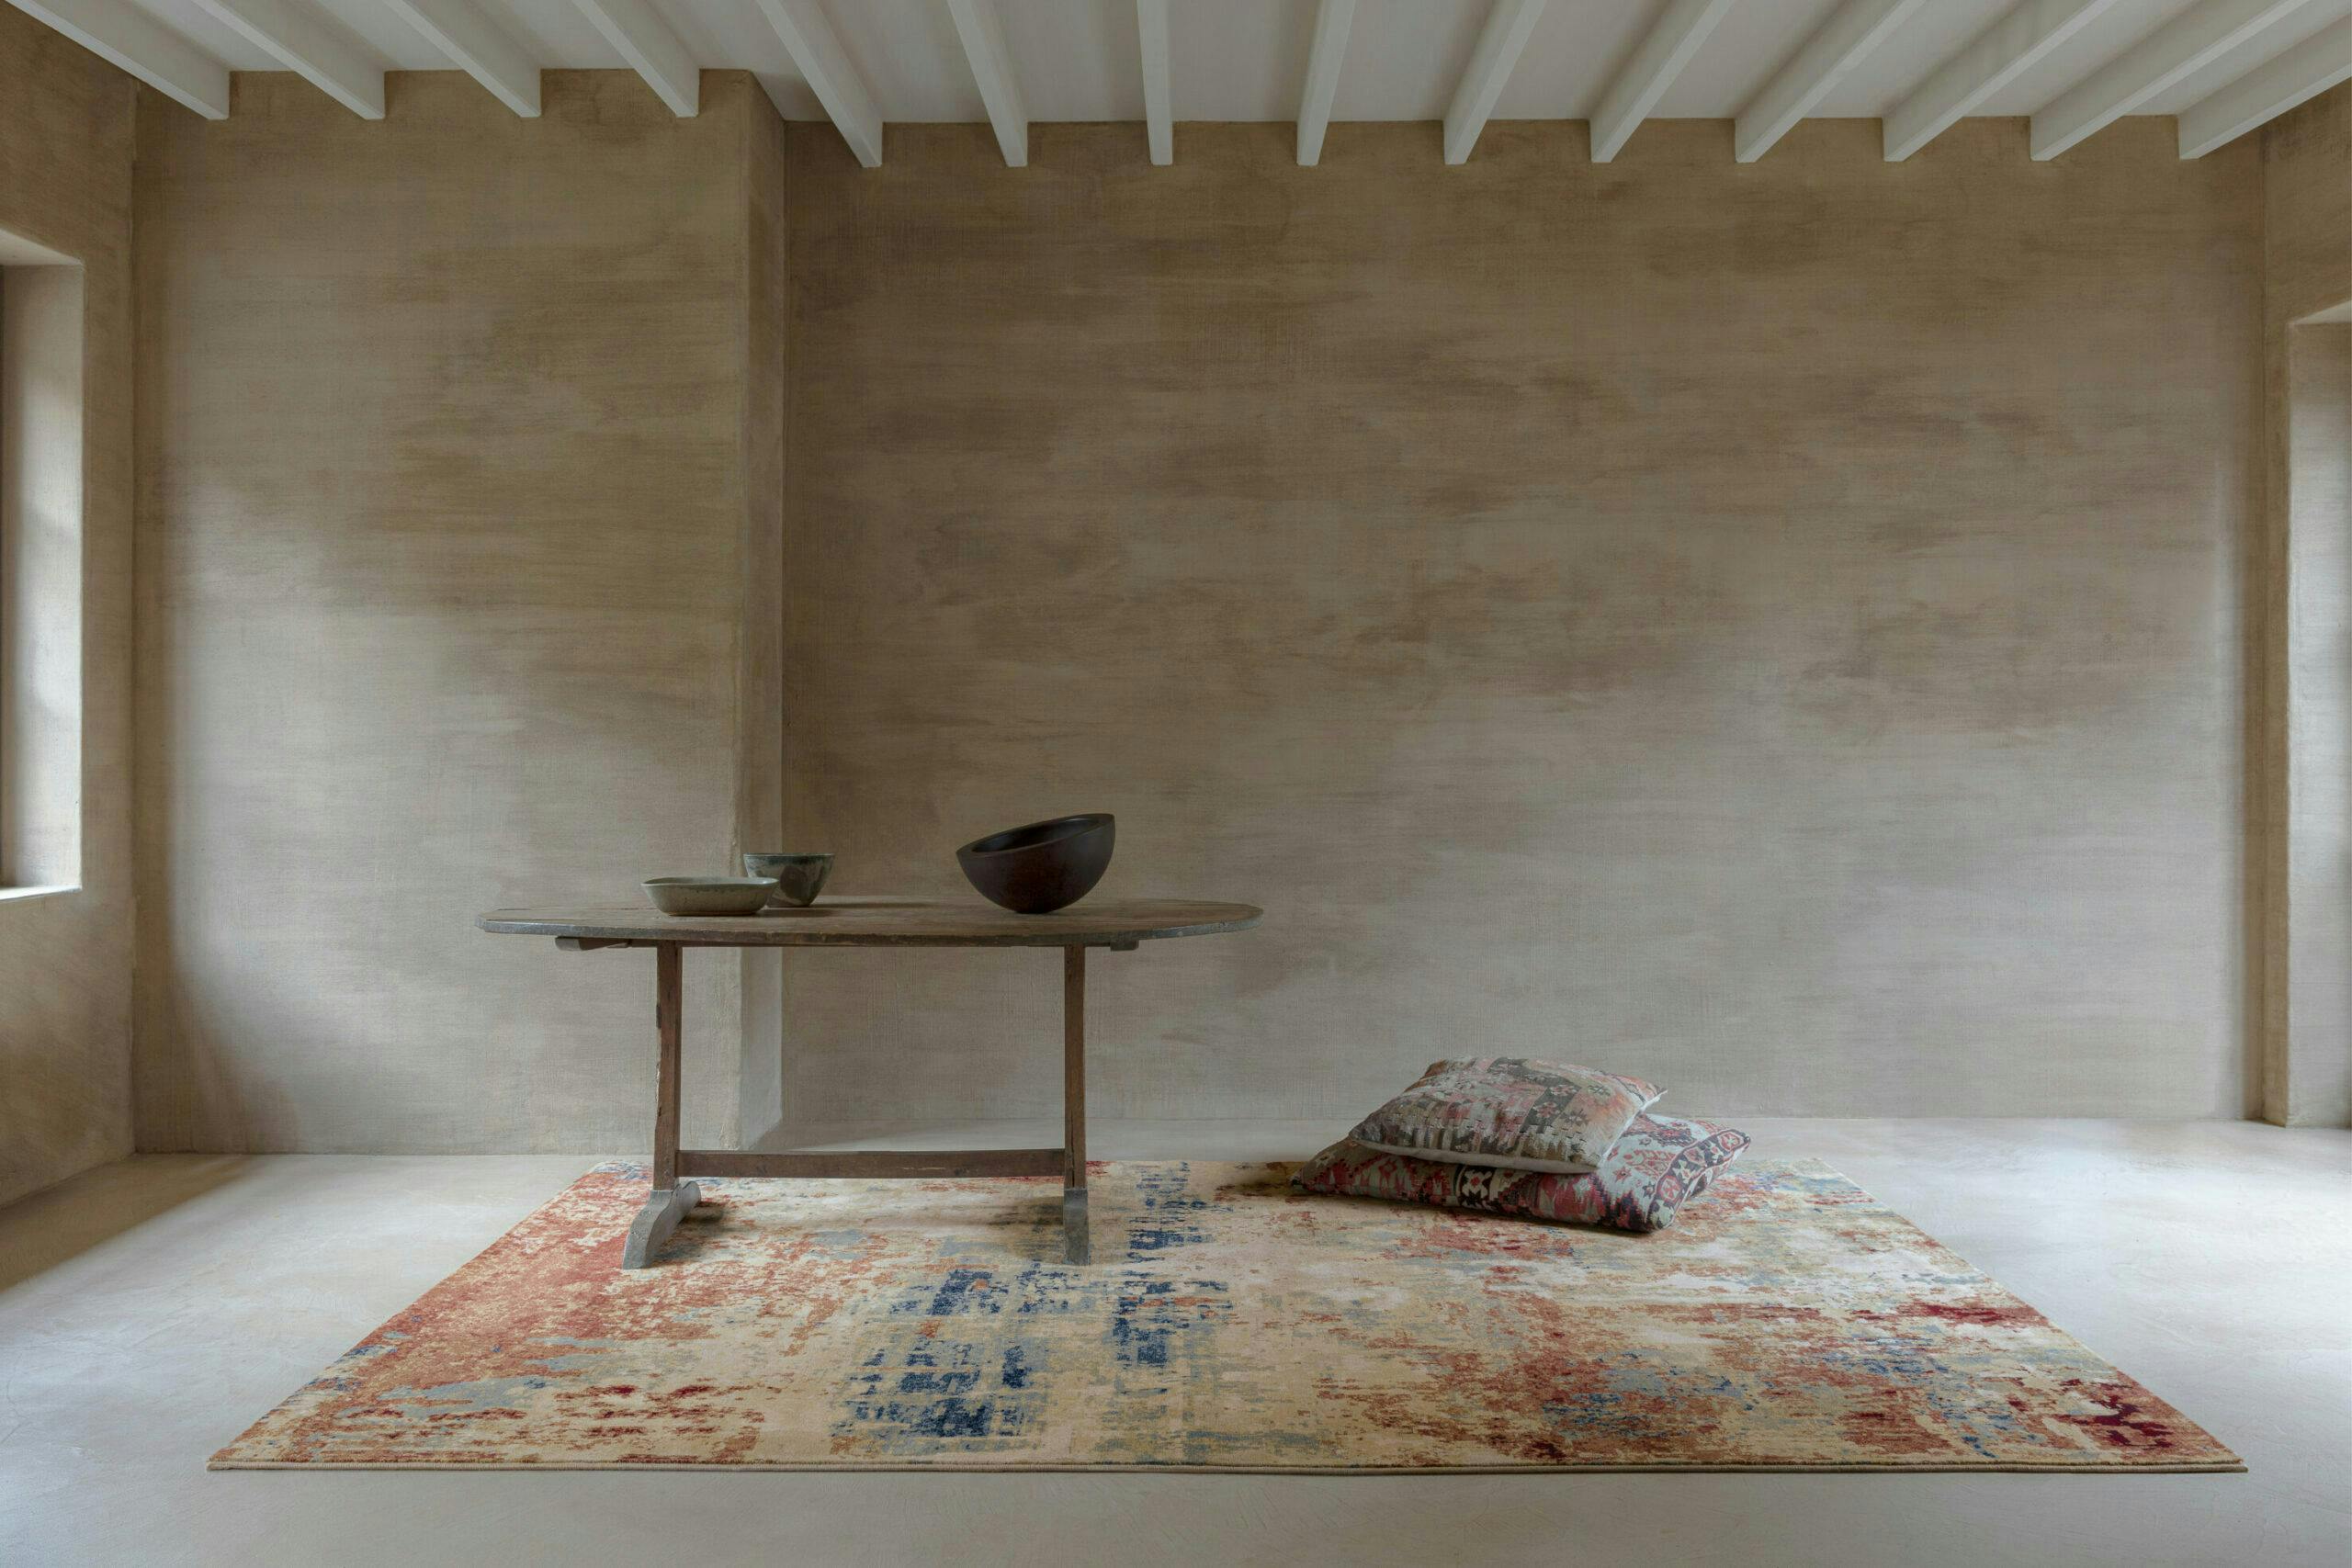 72_419_0_92990_2000300 home decor rug indoors interior design coffee table table corner floor cushion flooring